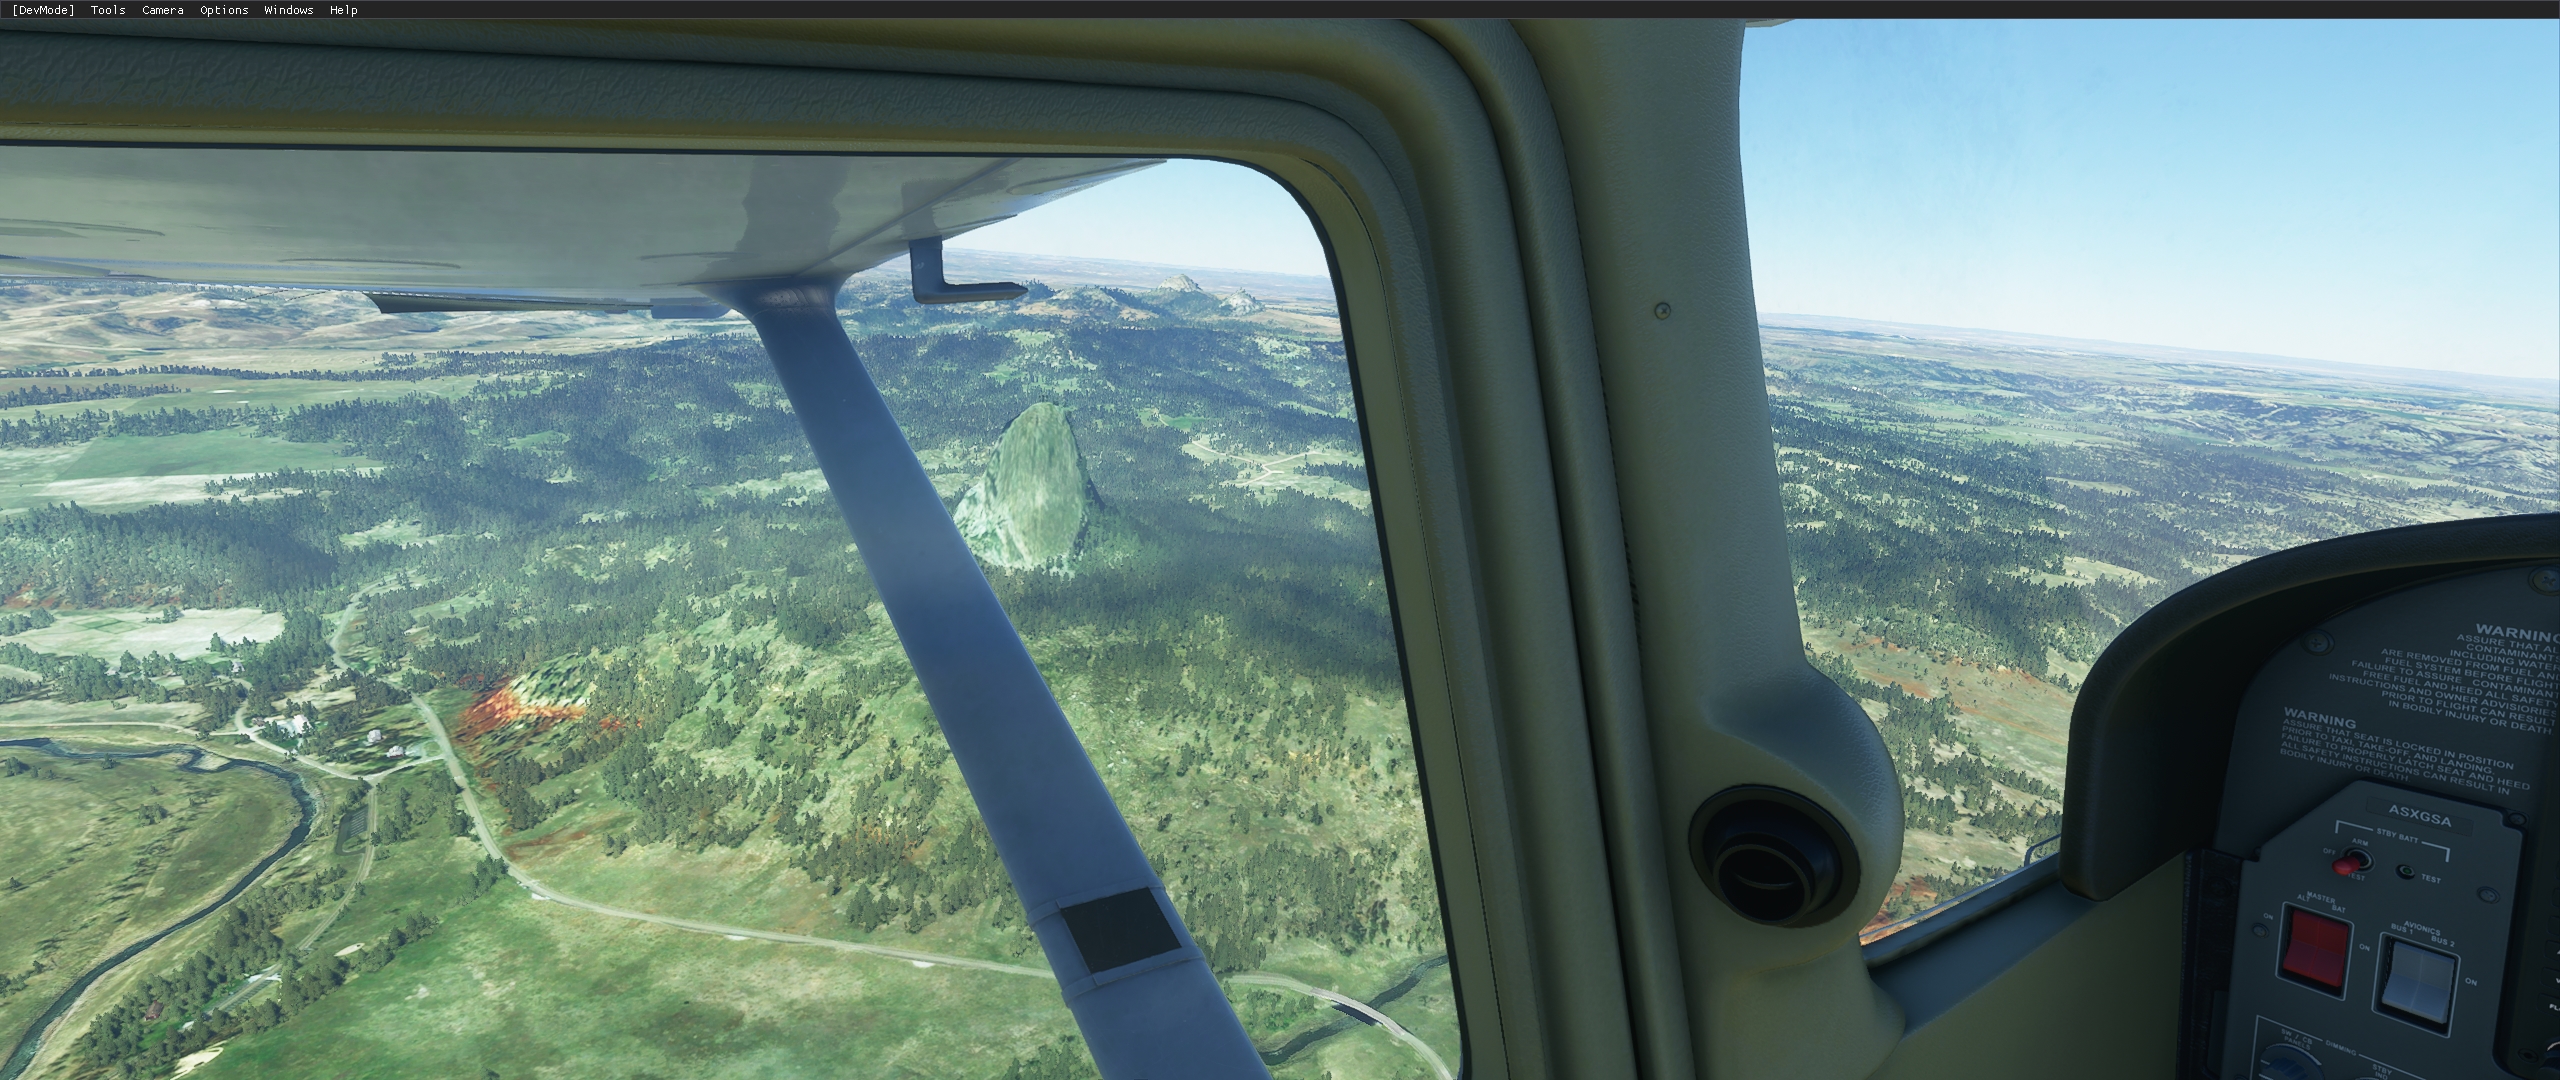 2020-08-25 19_14_24-Microsoft Flight Simulator - 1.7.12.0.jpg